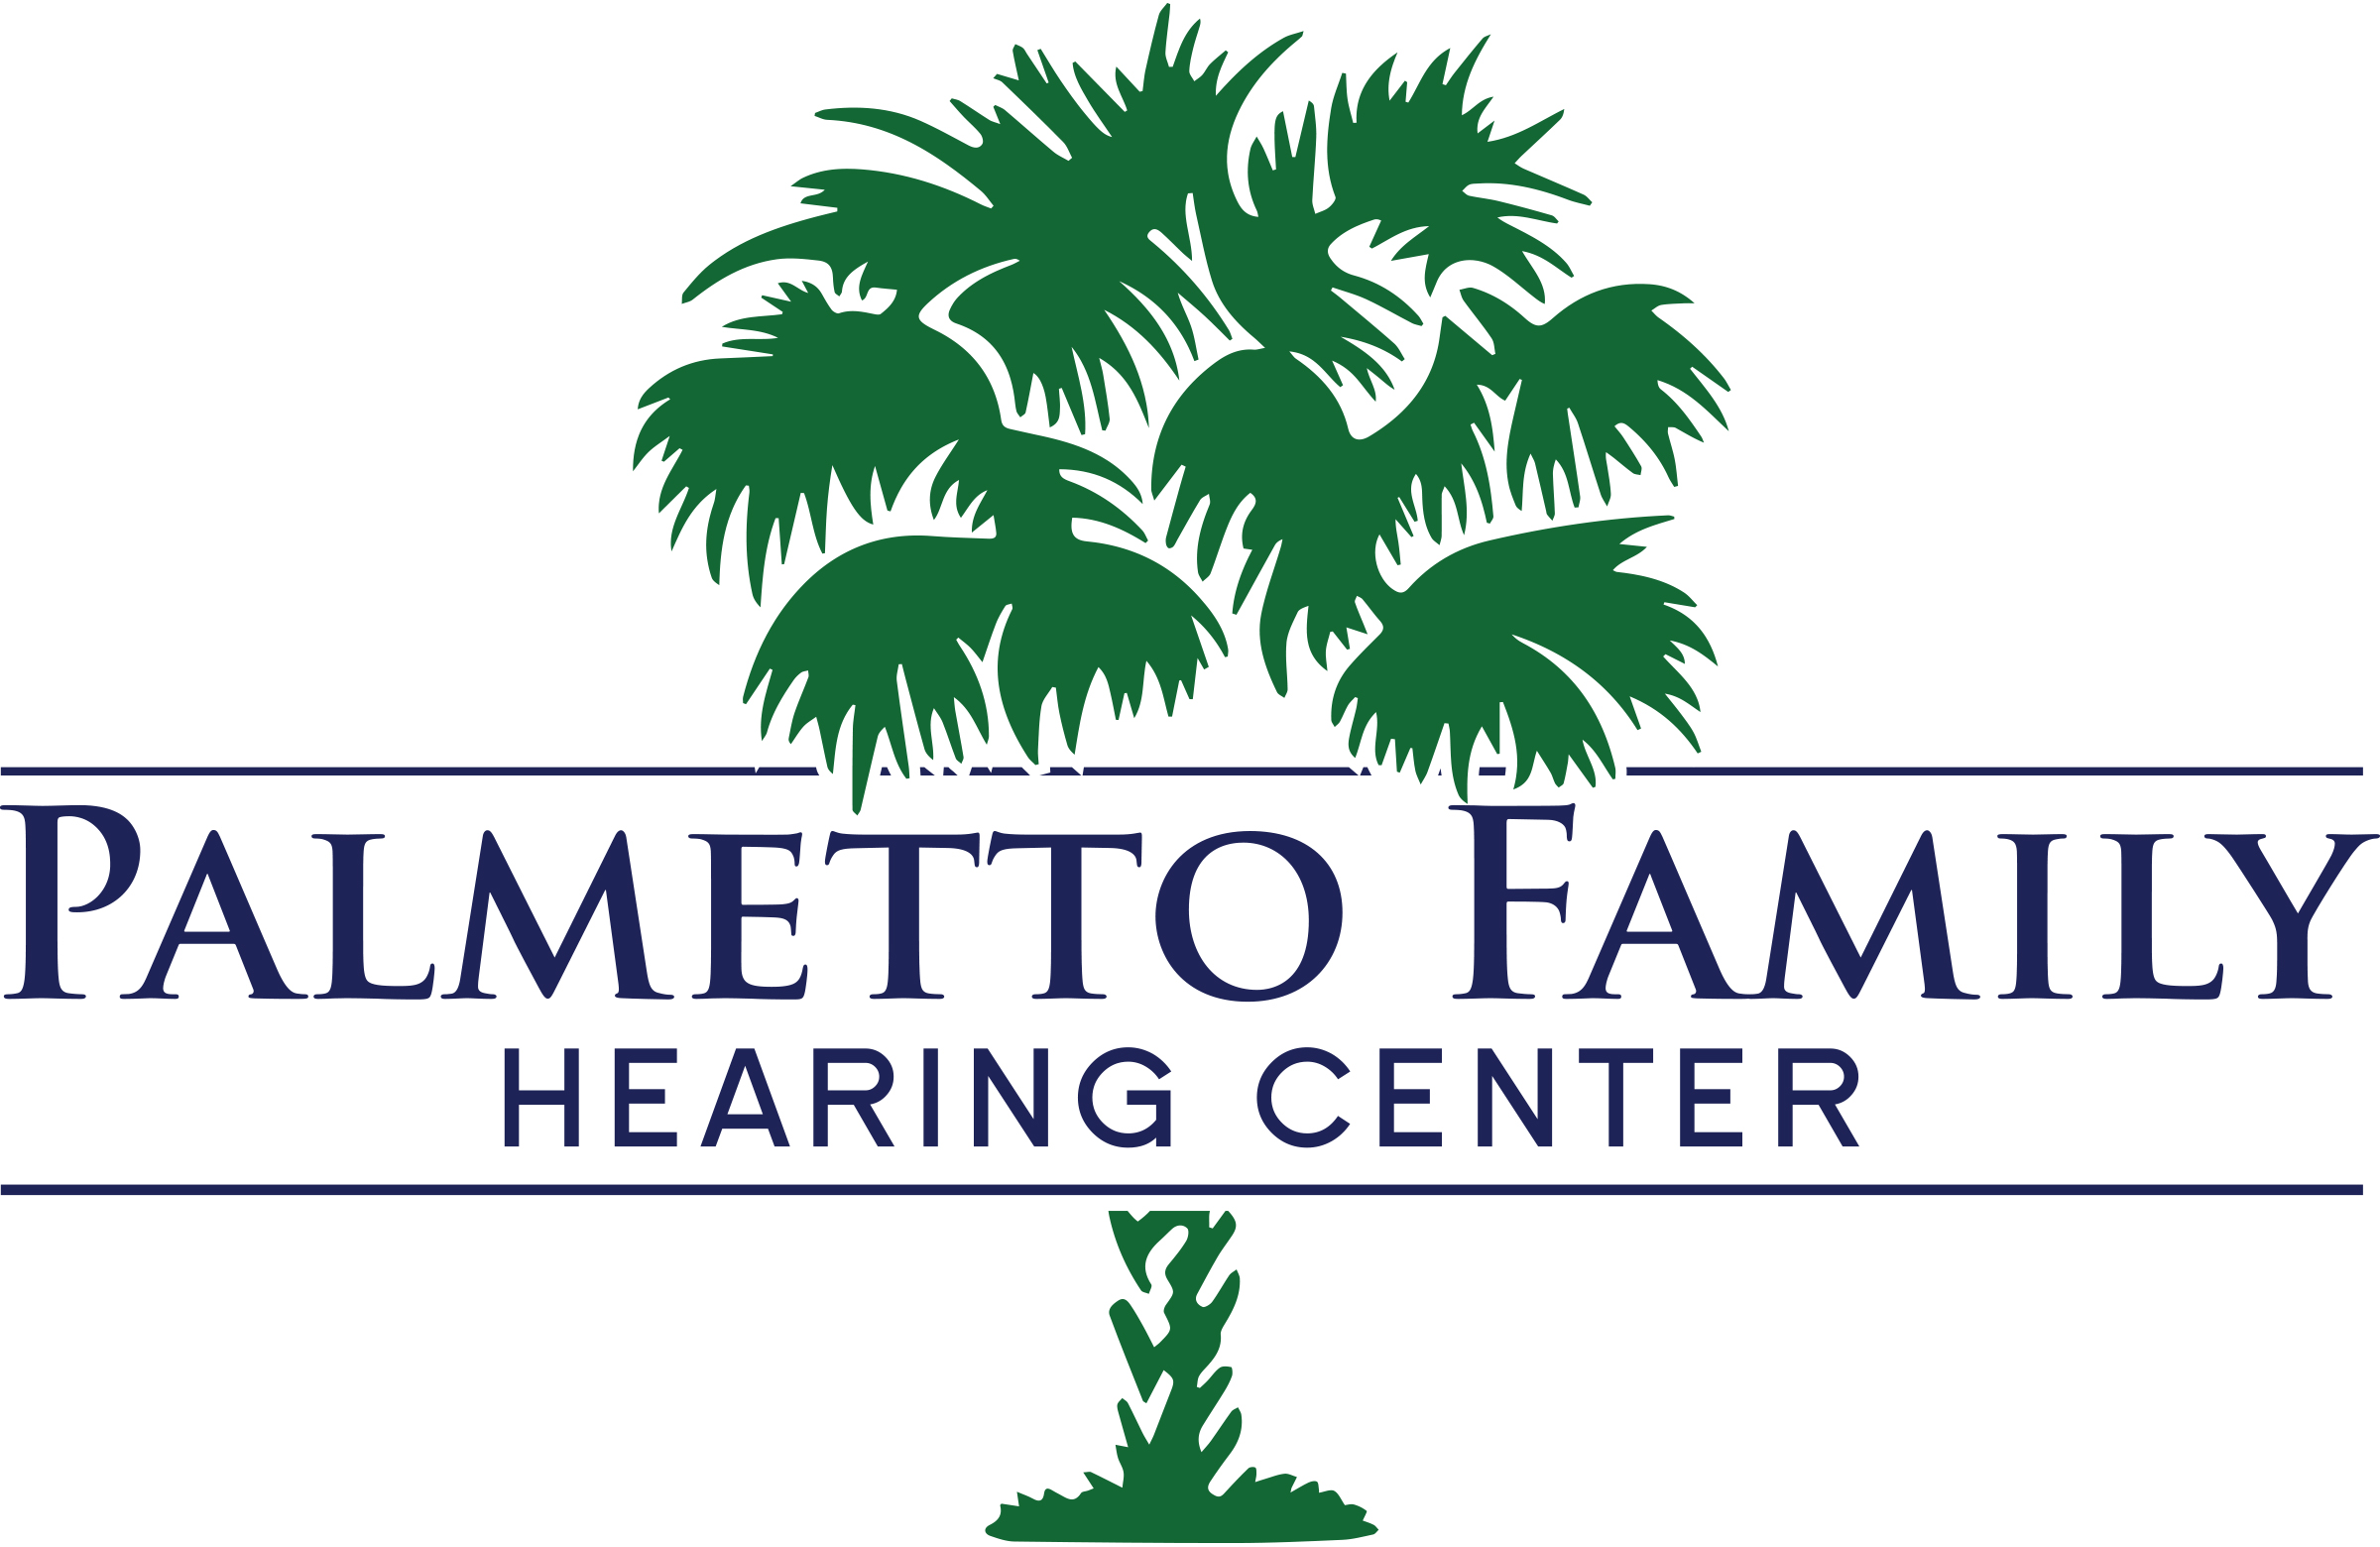 Palmetto Family Hearing Center - Ft. Mill logo